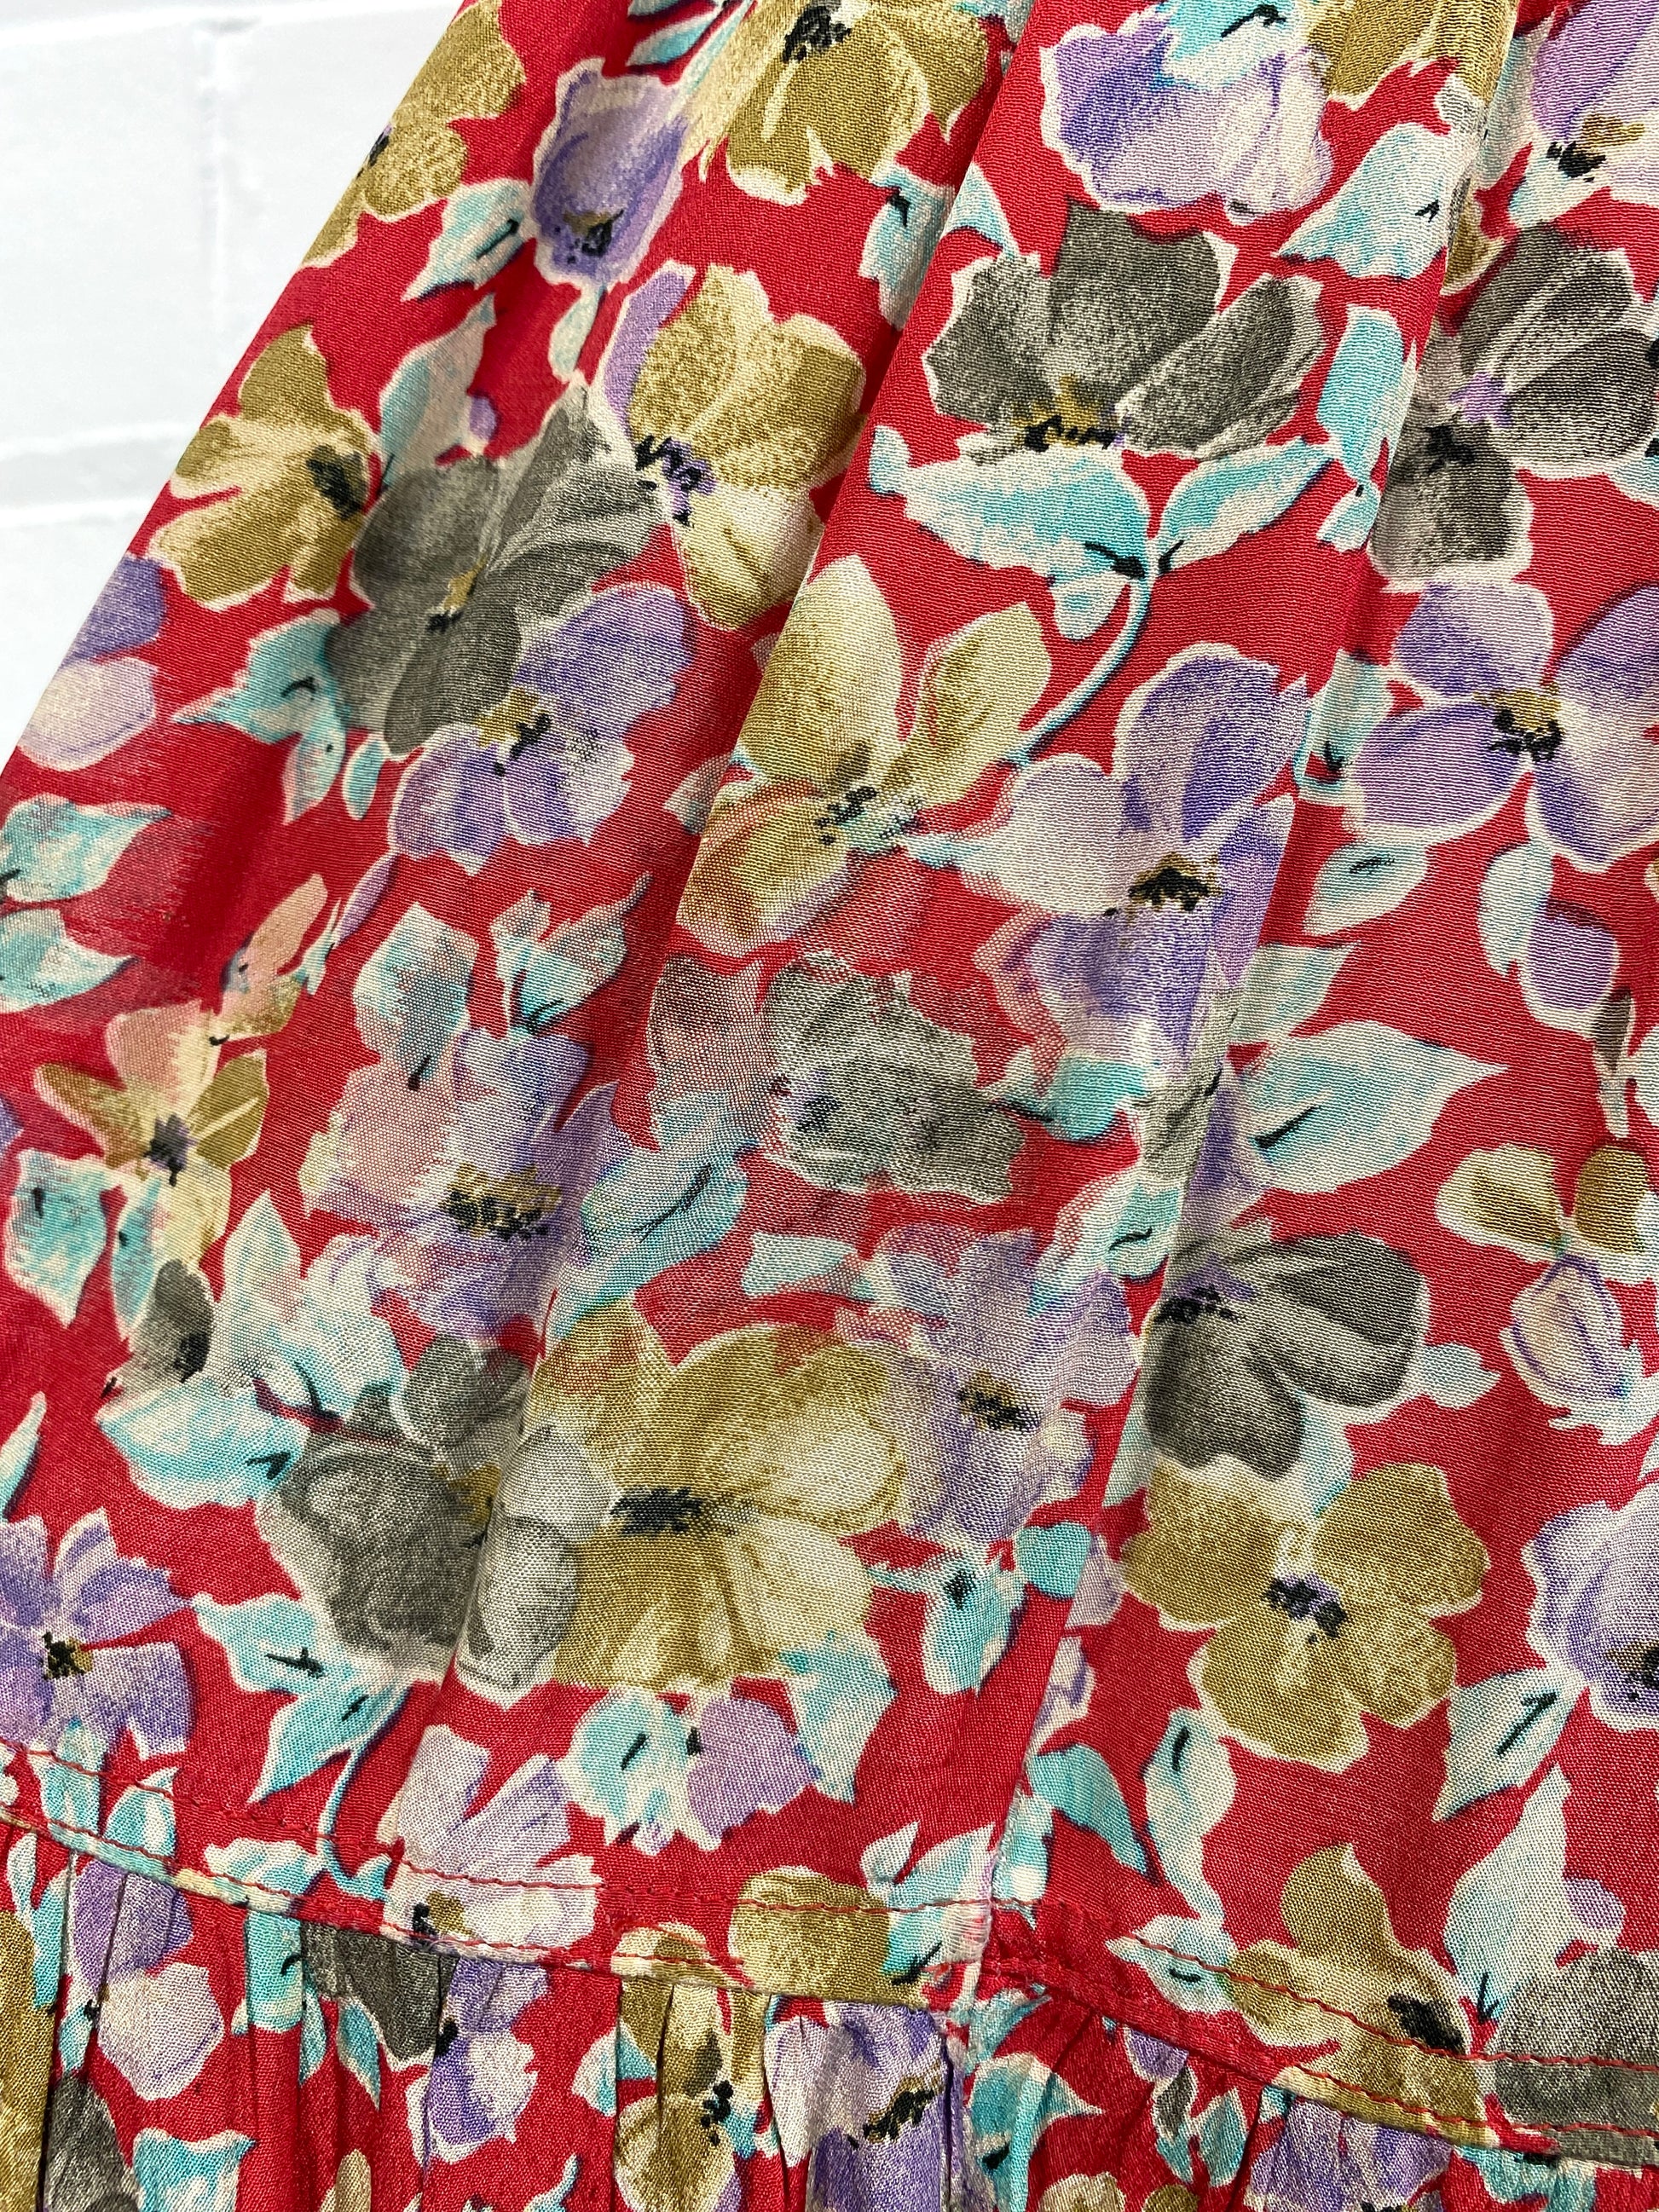 Vintage 1980s Floral Rayon Button Down Midi-Skirt, Medium